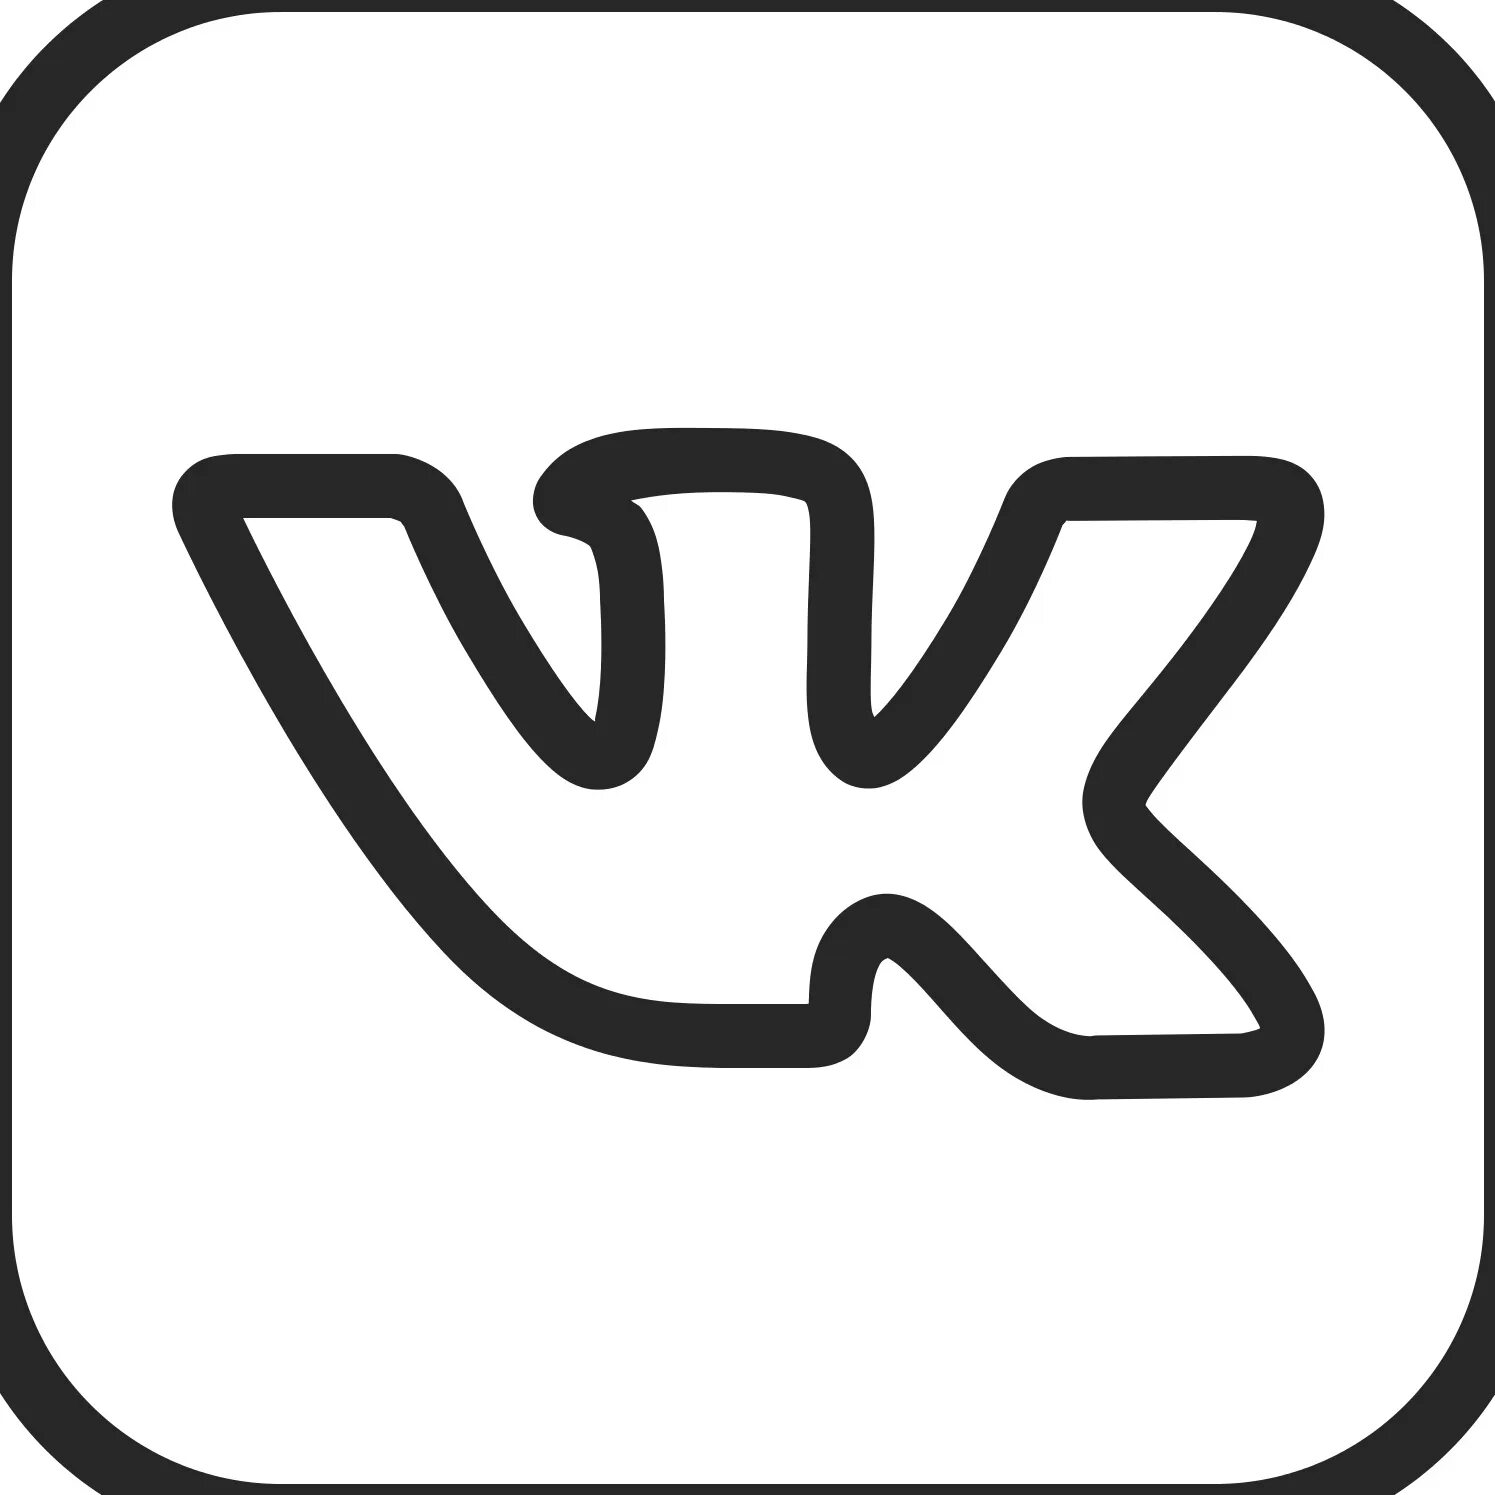 Vk com atomicrust. Значок ВК. Значок Вики. OBK логотип. Значок ВК белый.